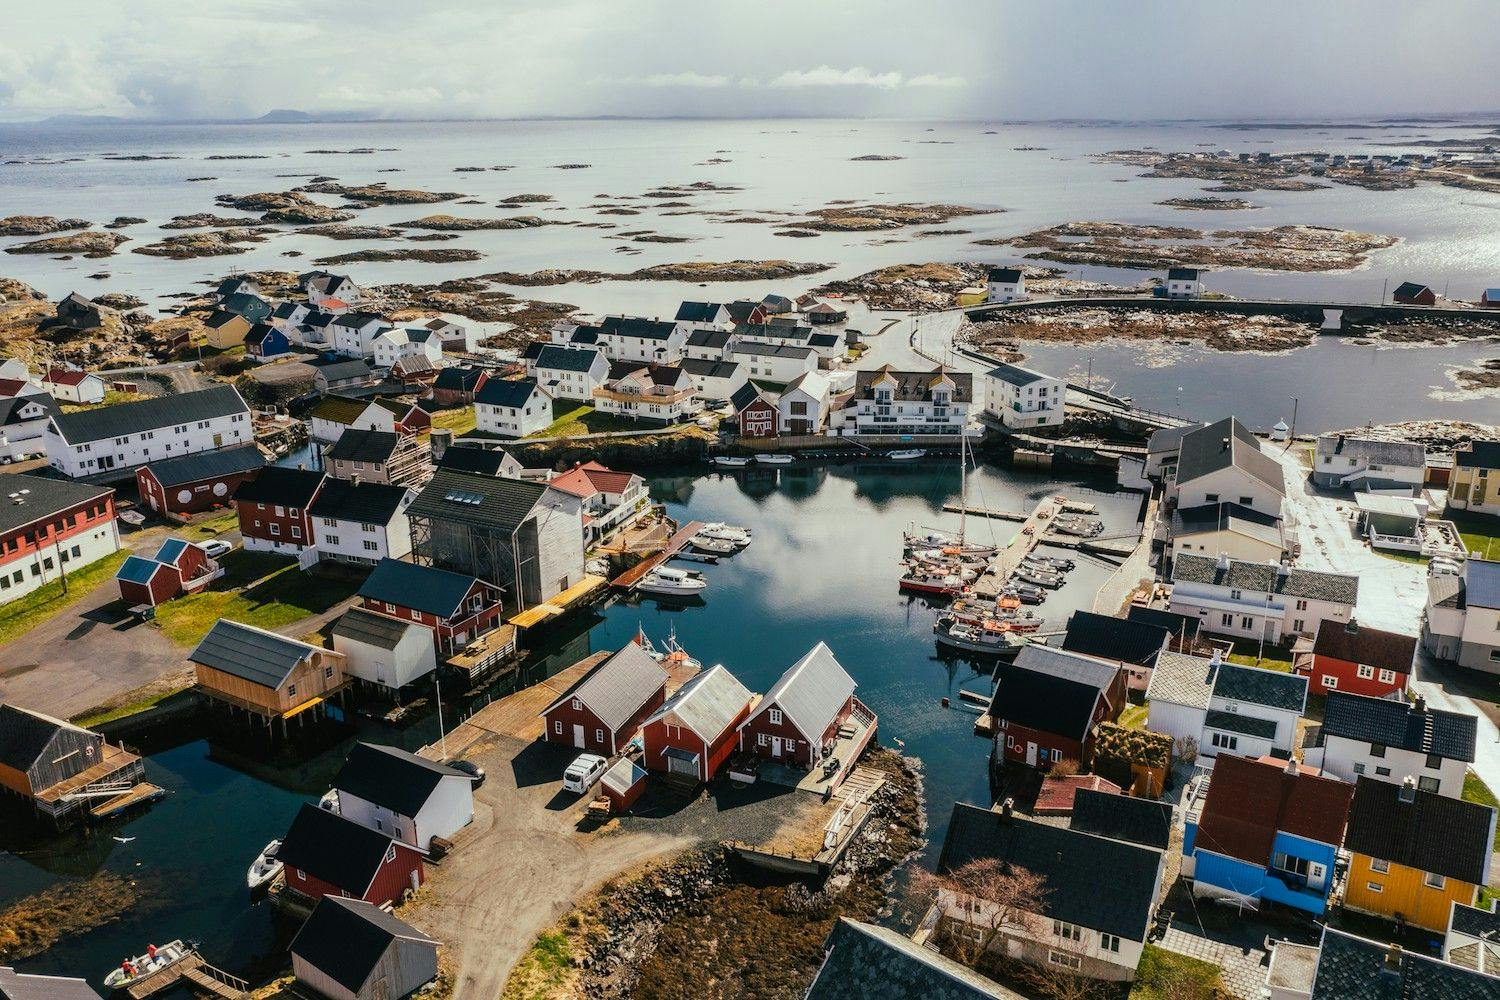 remote island community in norway